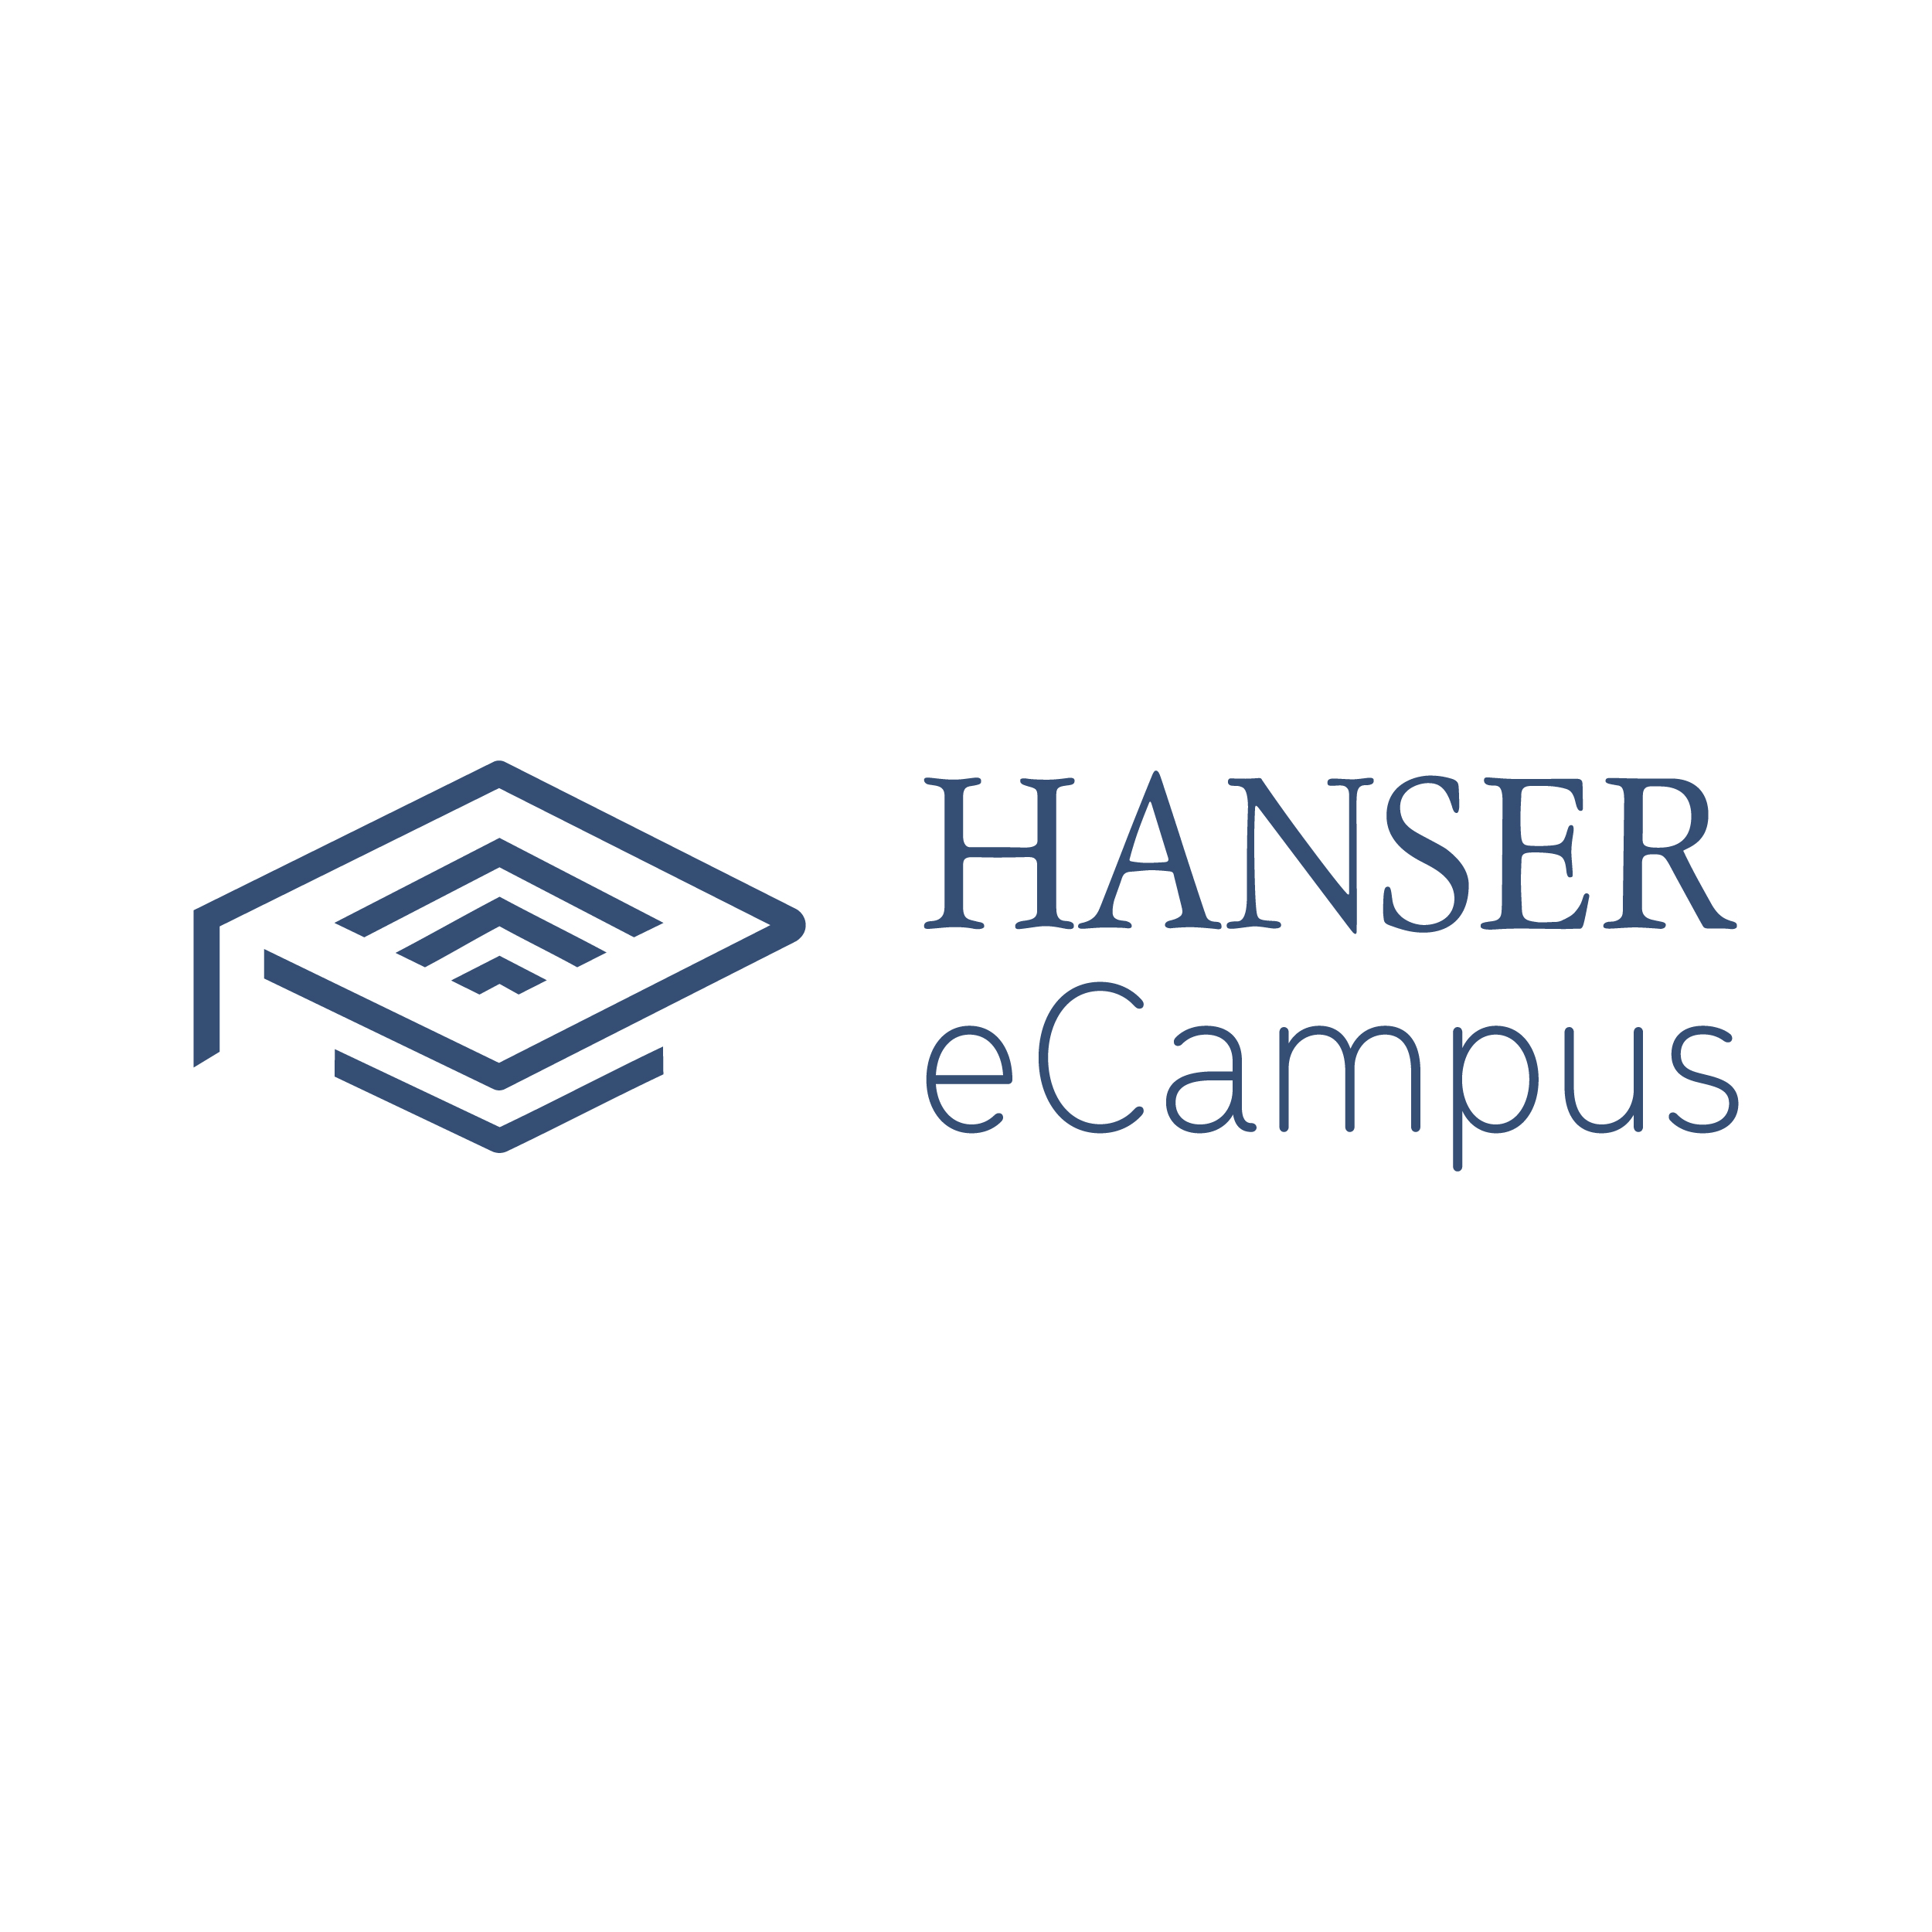 Image for Hanser eCampus